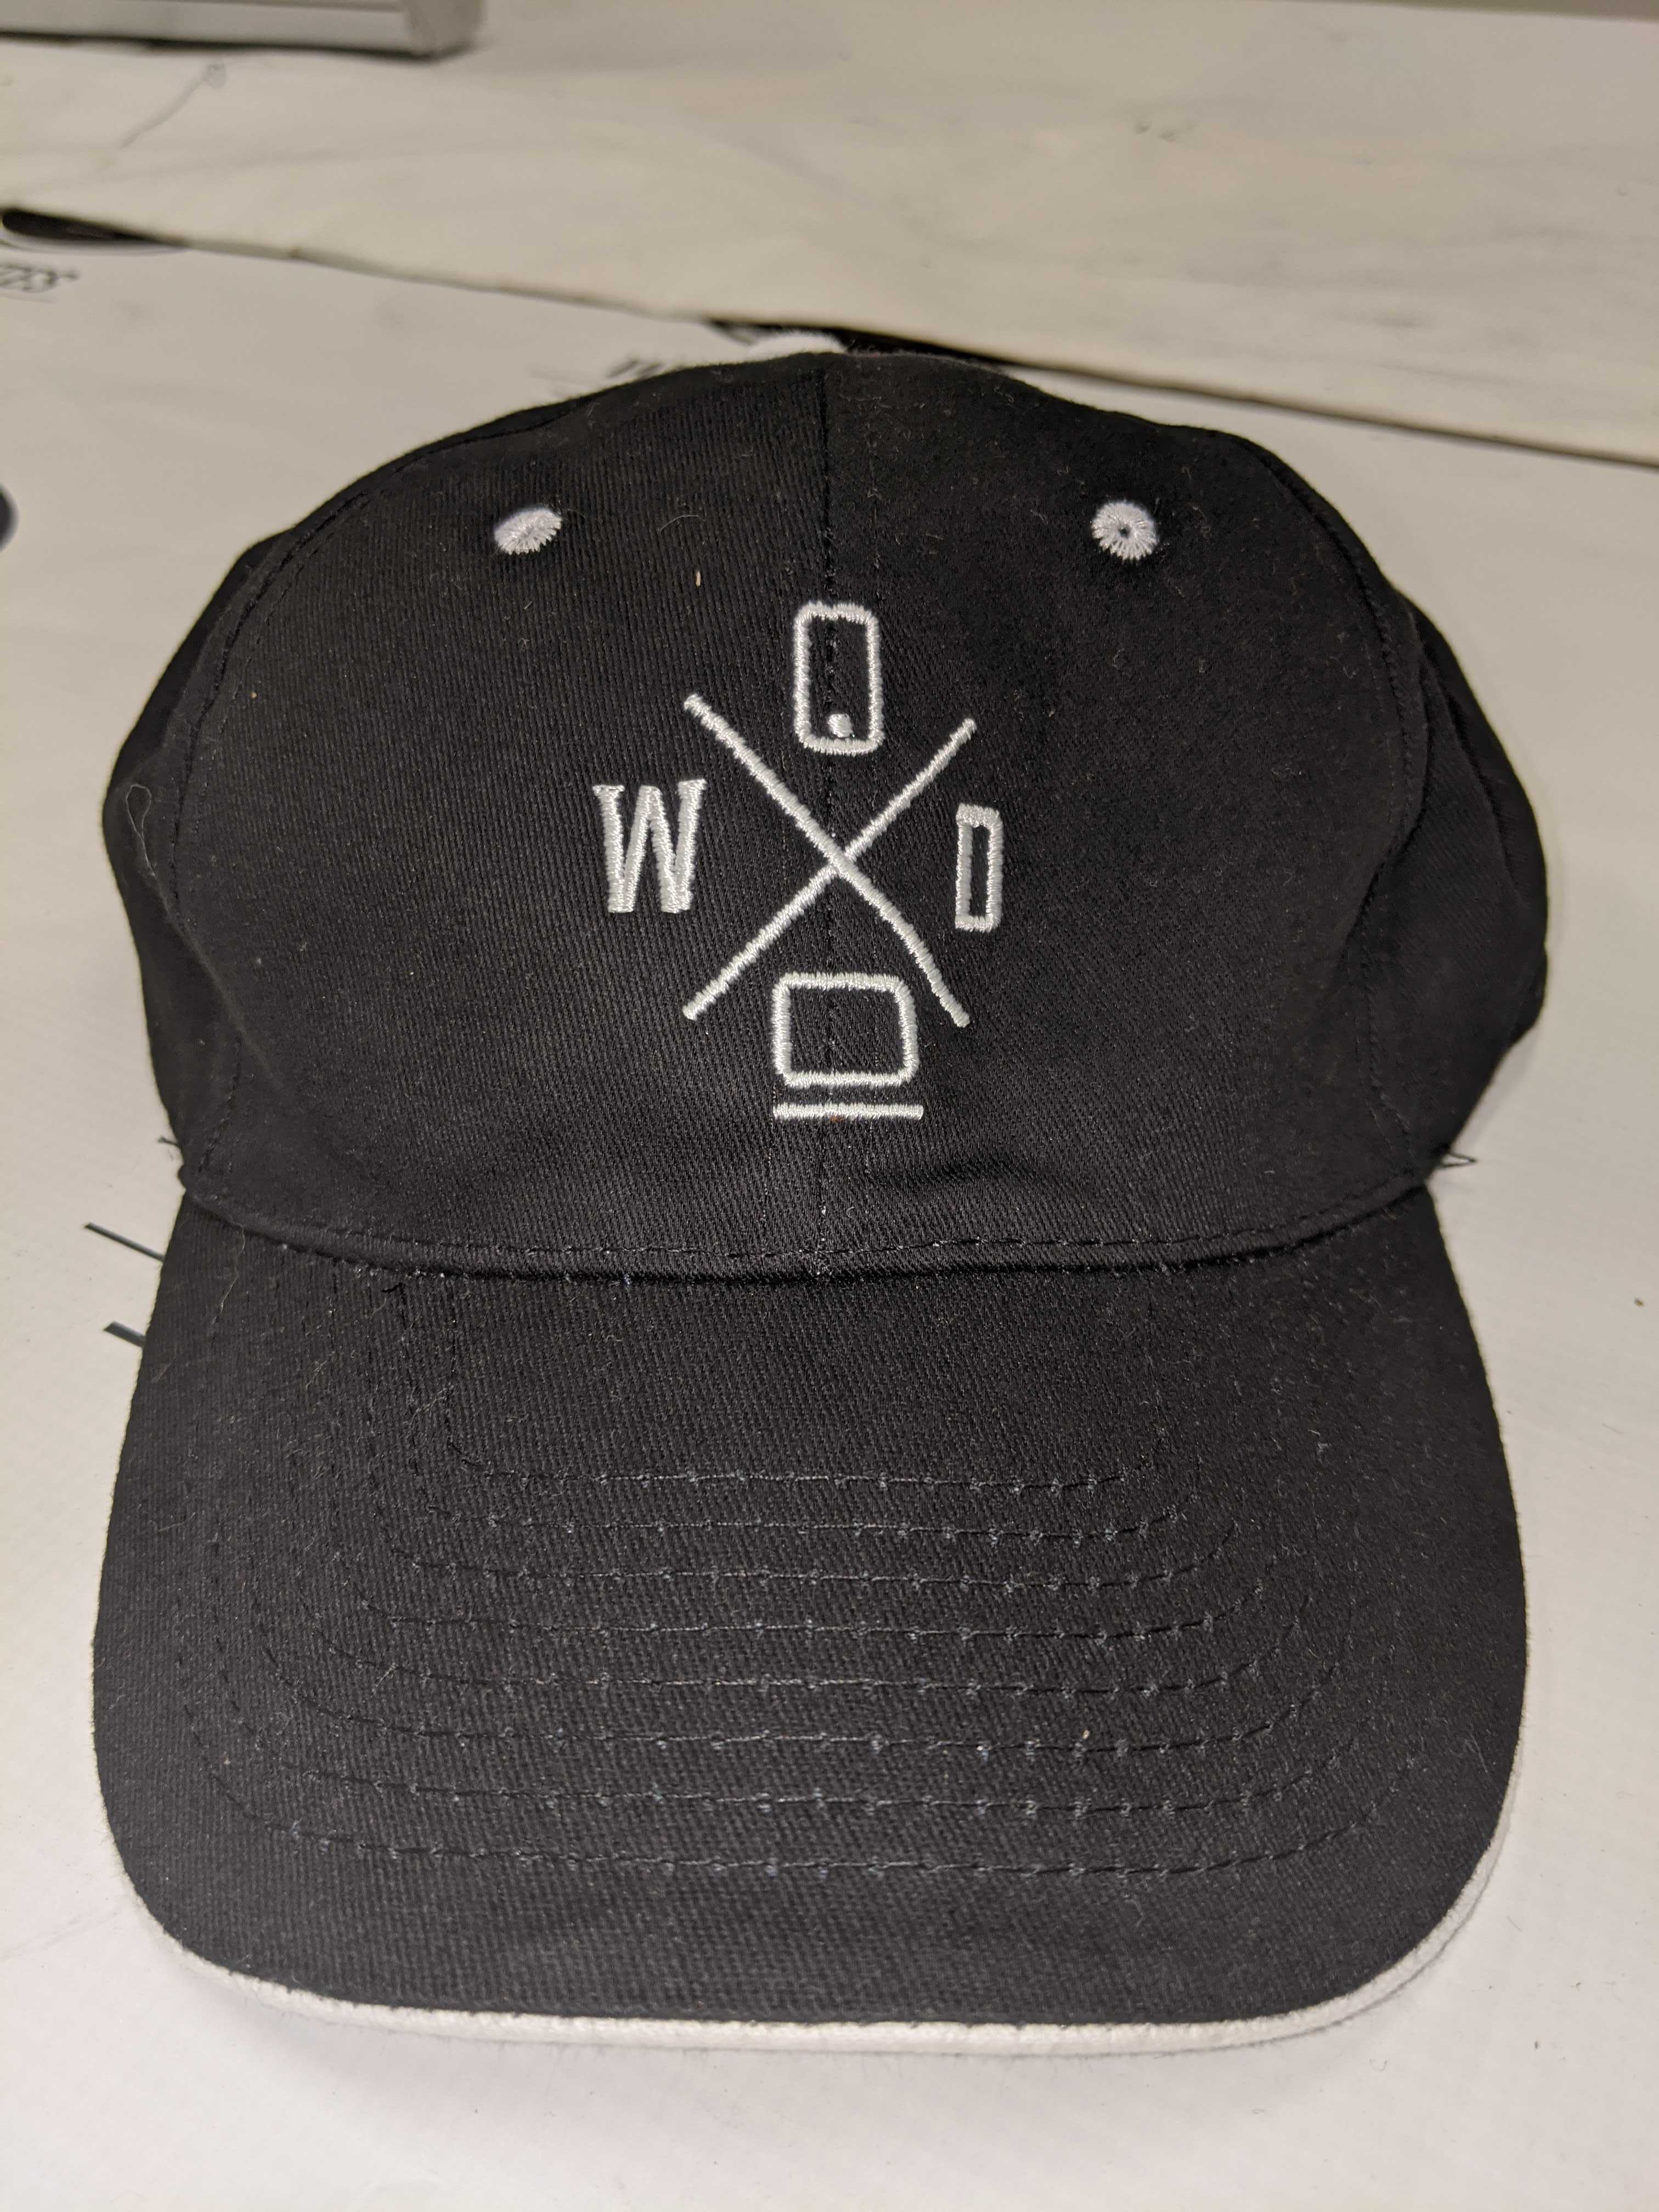 Website Depot Hat with WD Logos | Website Depot Digital E-commerce ...